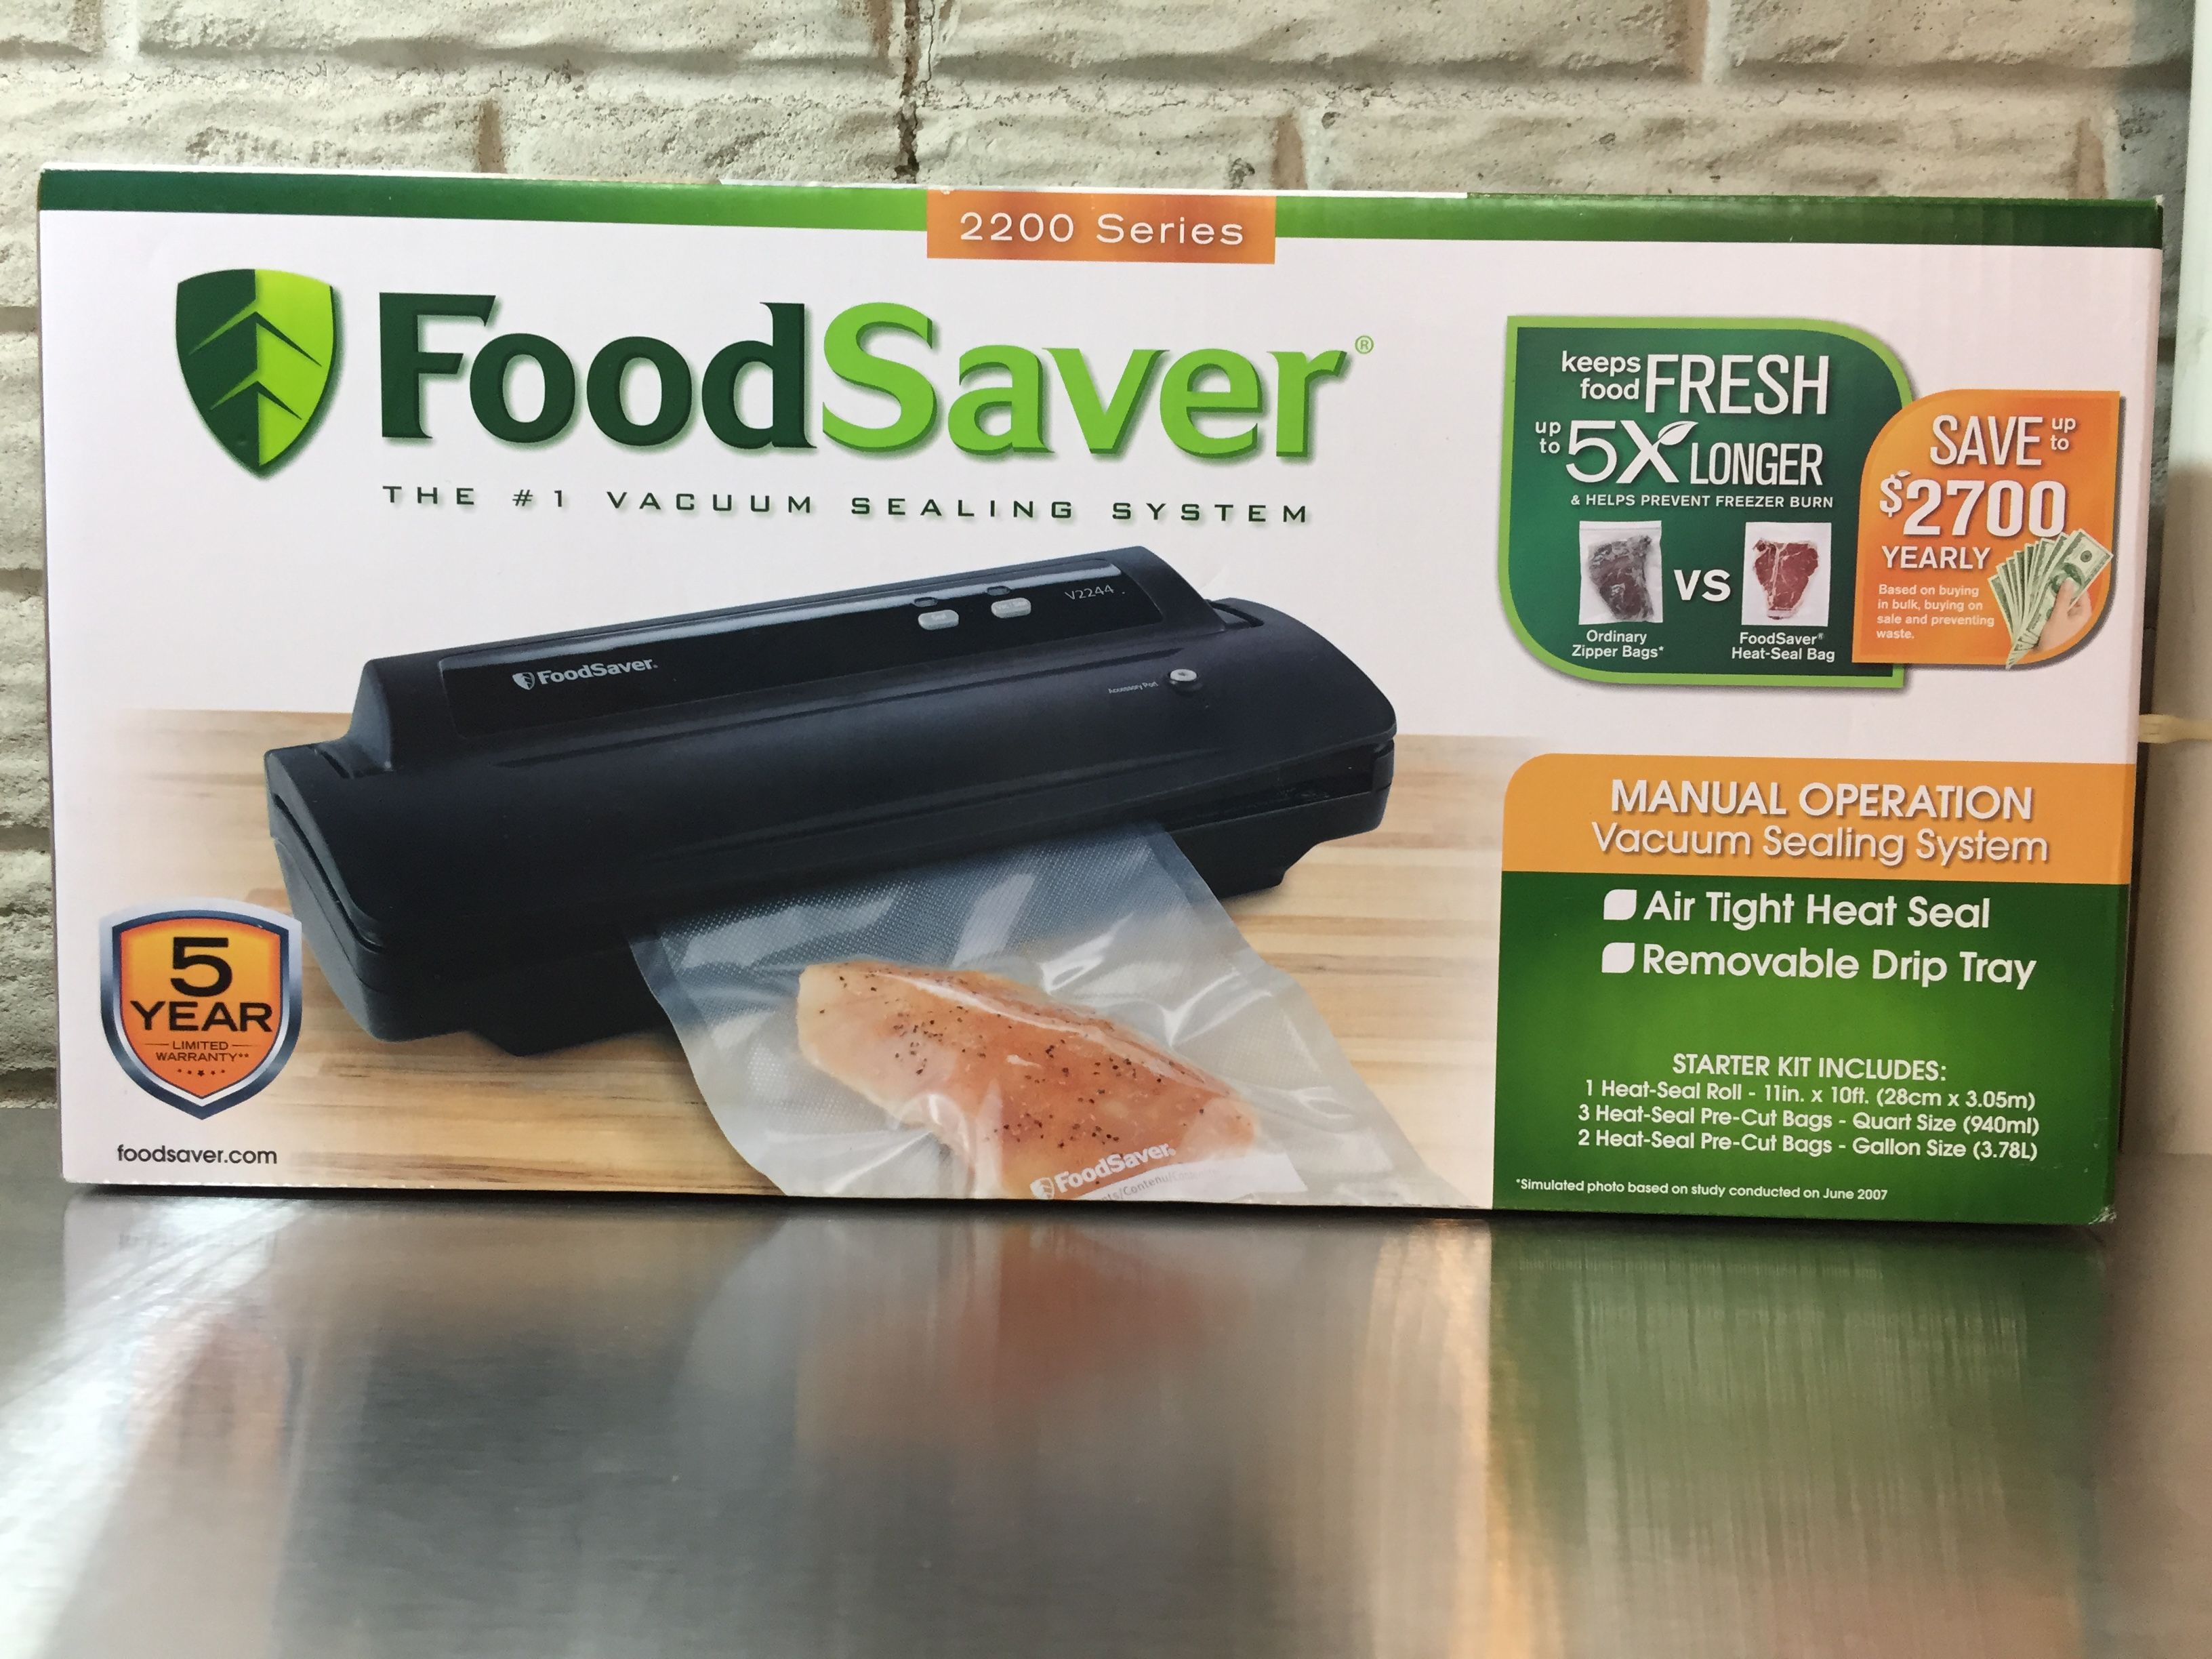 FoodSaver Heat-Seal Vacuum Sealer Roll - Single